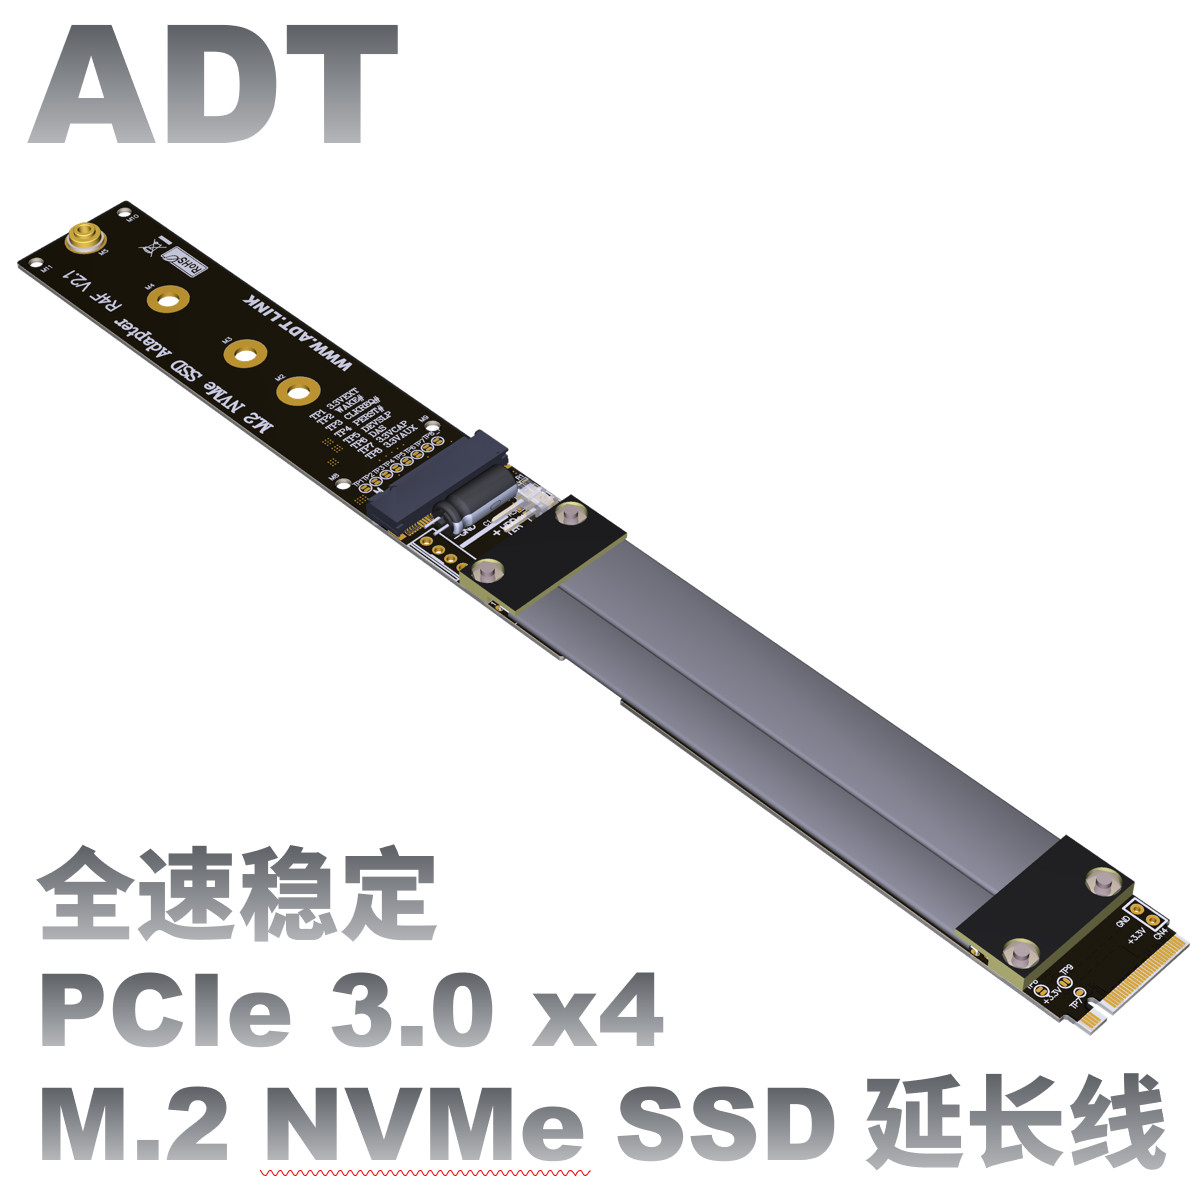 M.2 NVMe SSD固态硬盘延长转接线支持PCIE 3.0 x4全速稳定 ADT